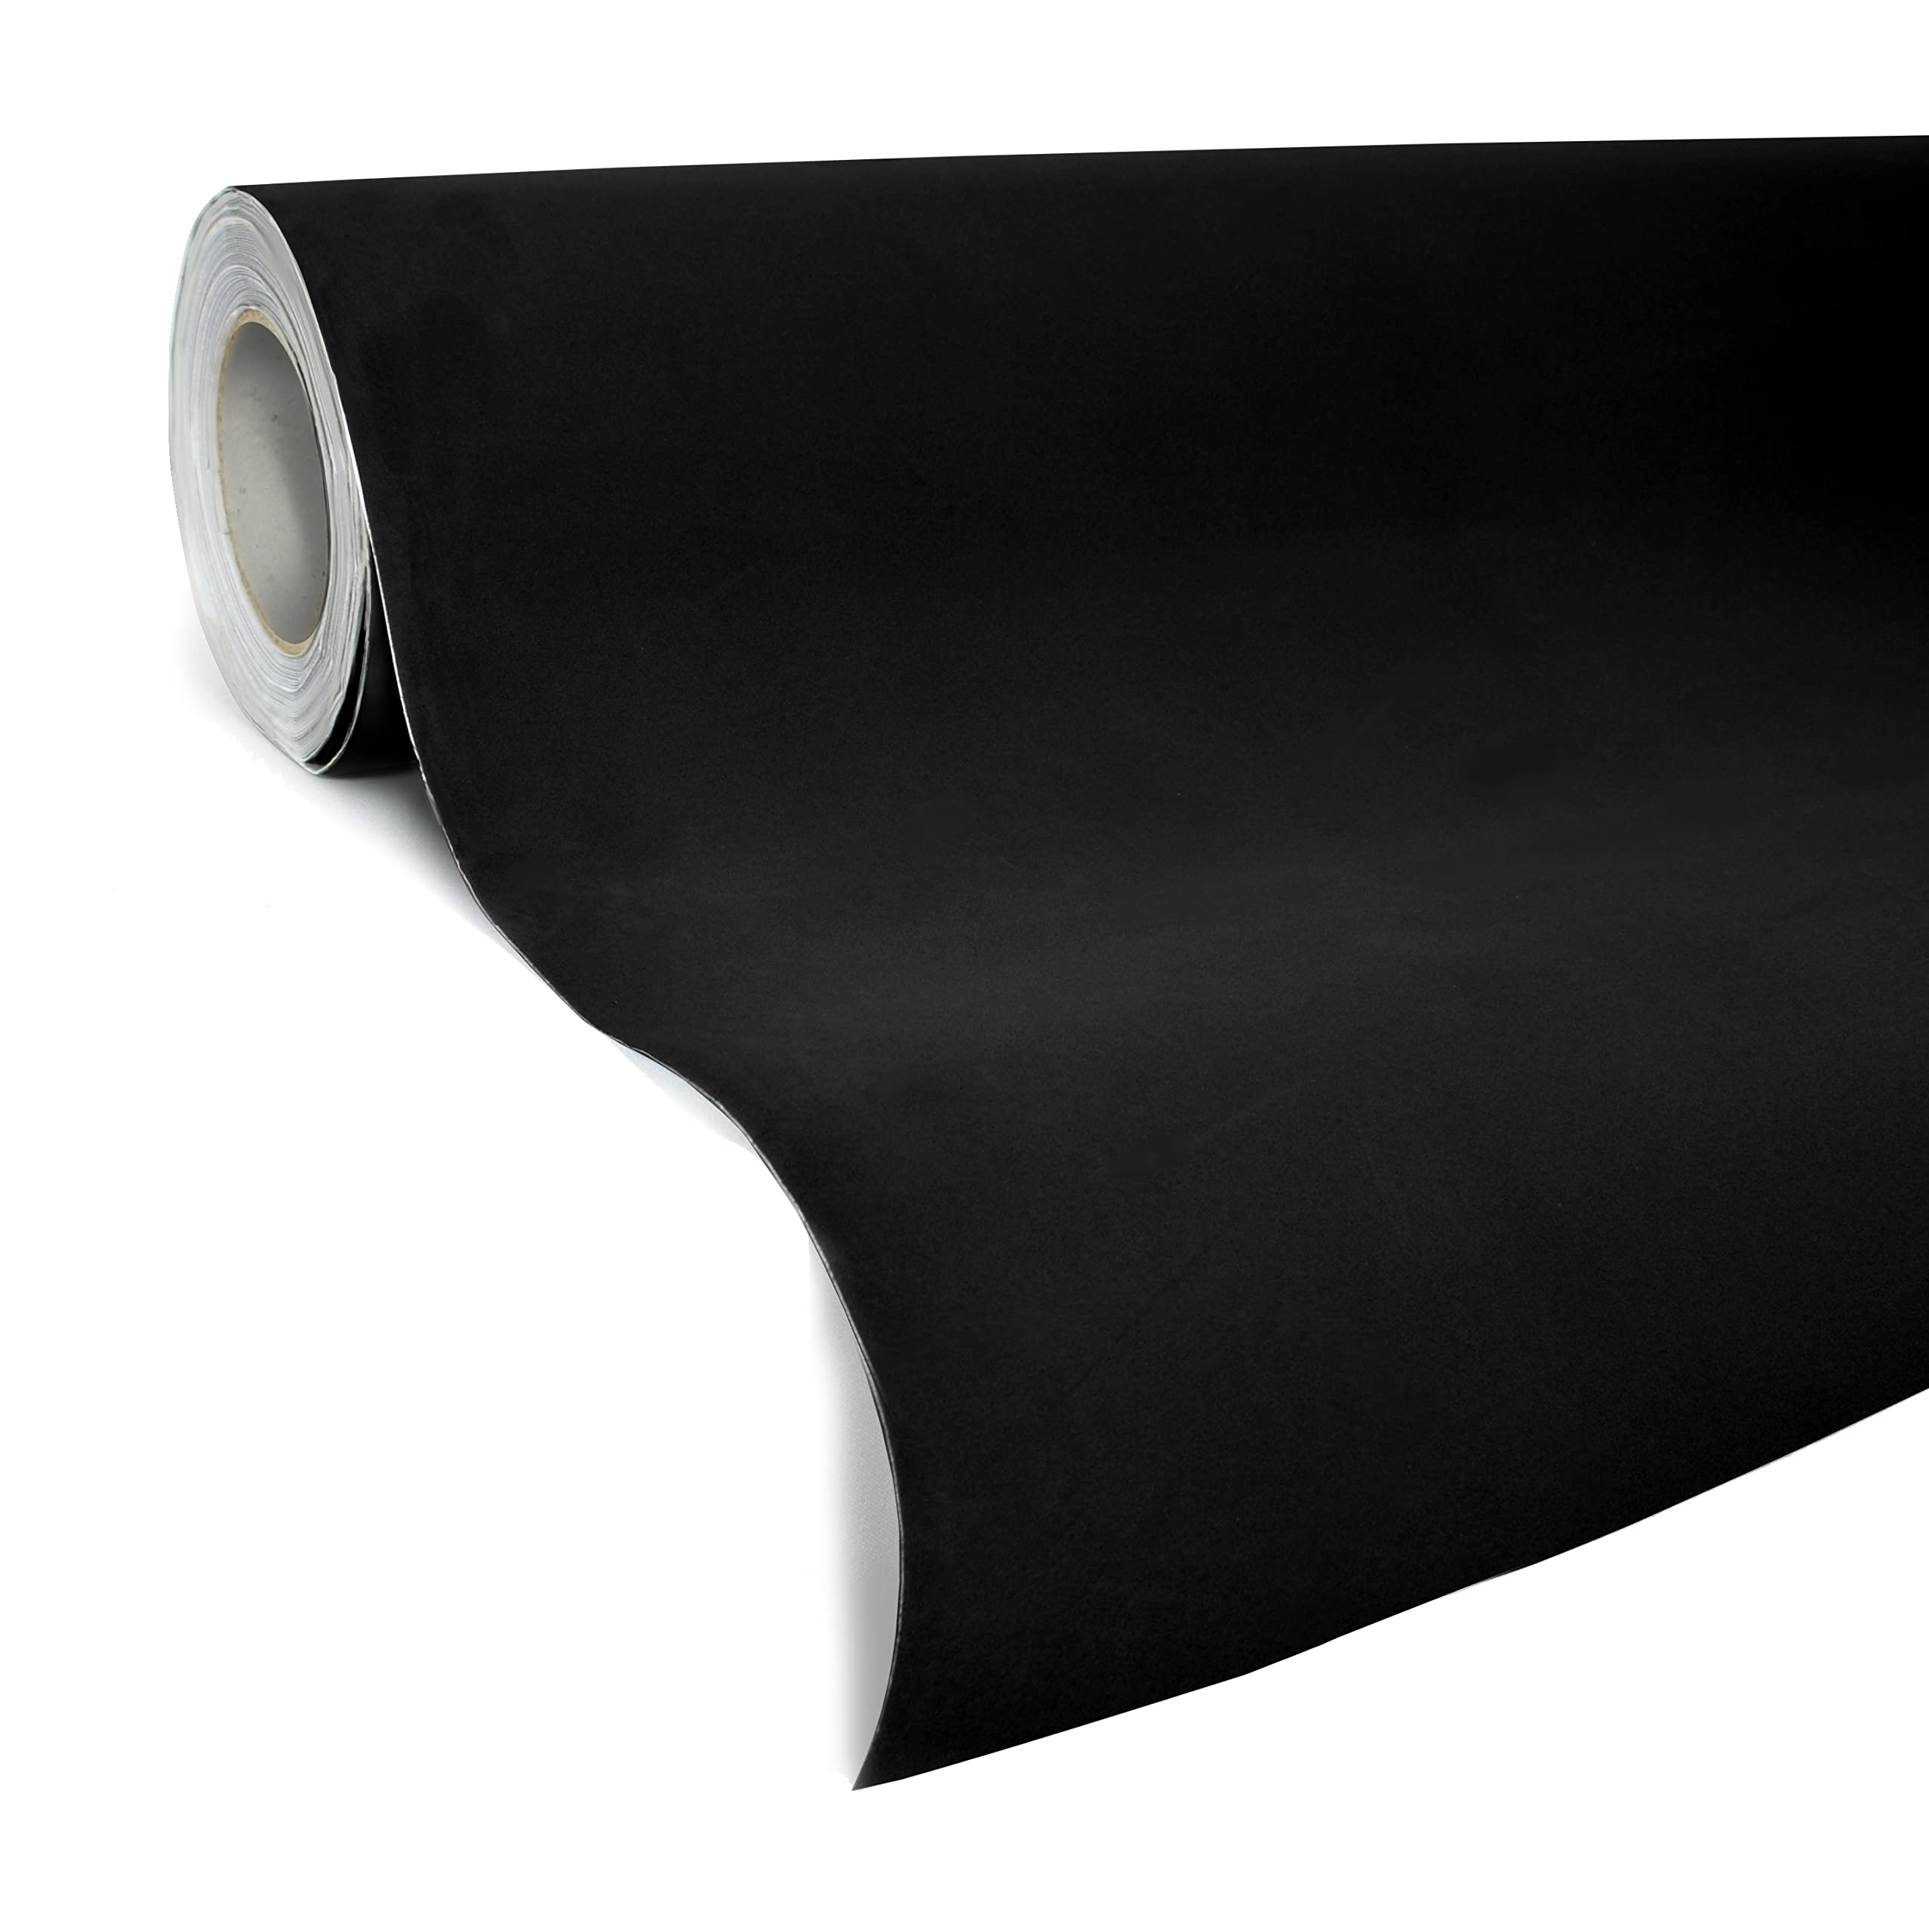 Black Felt Suede Car Furniture Wrap Vinyl Wrap Roll With VViViD XPO Air Release Technology (10ft x 4.43ft)